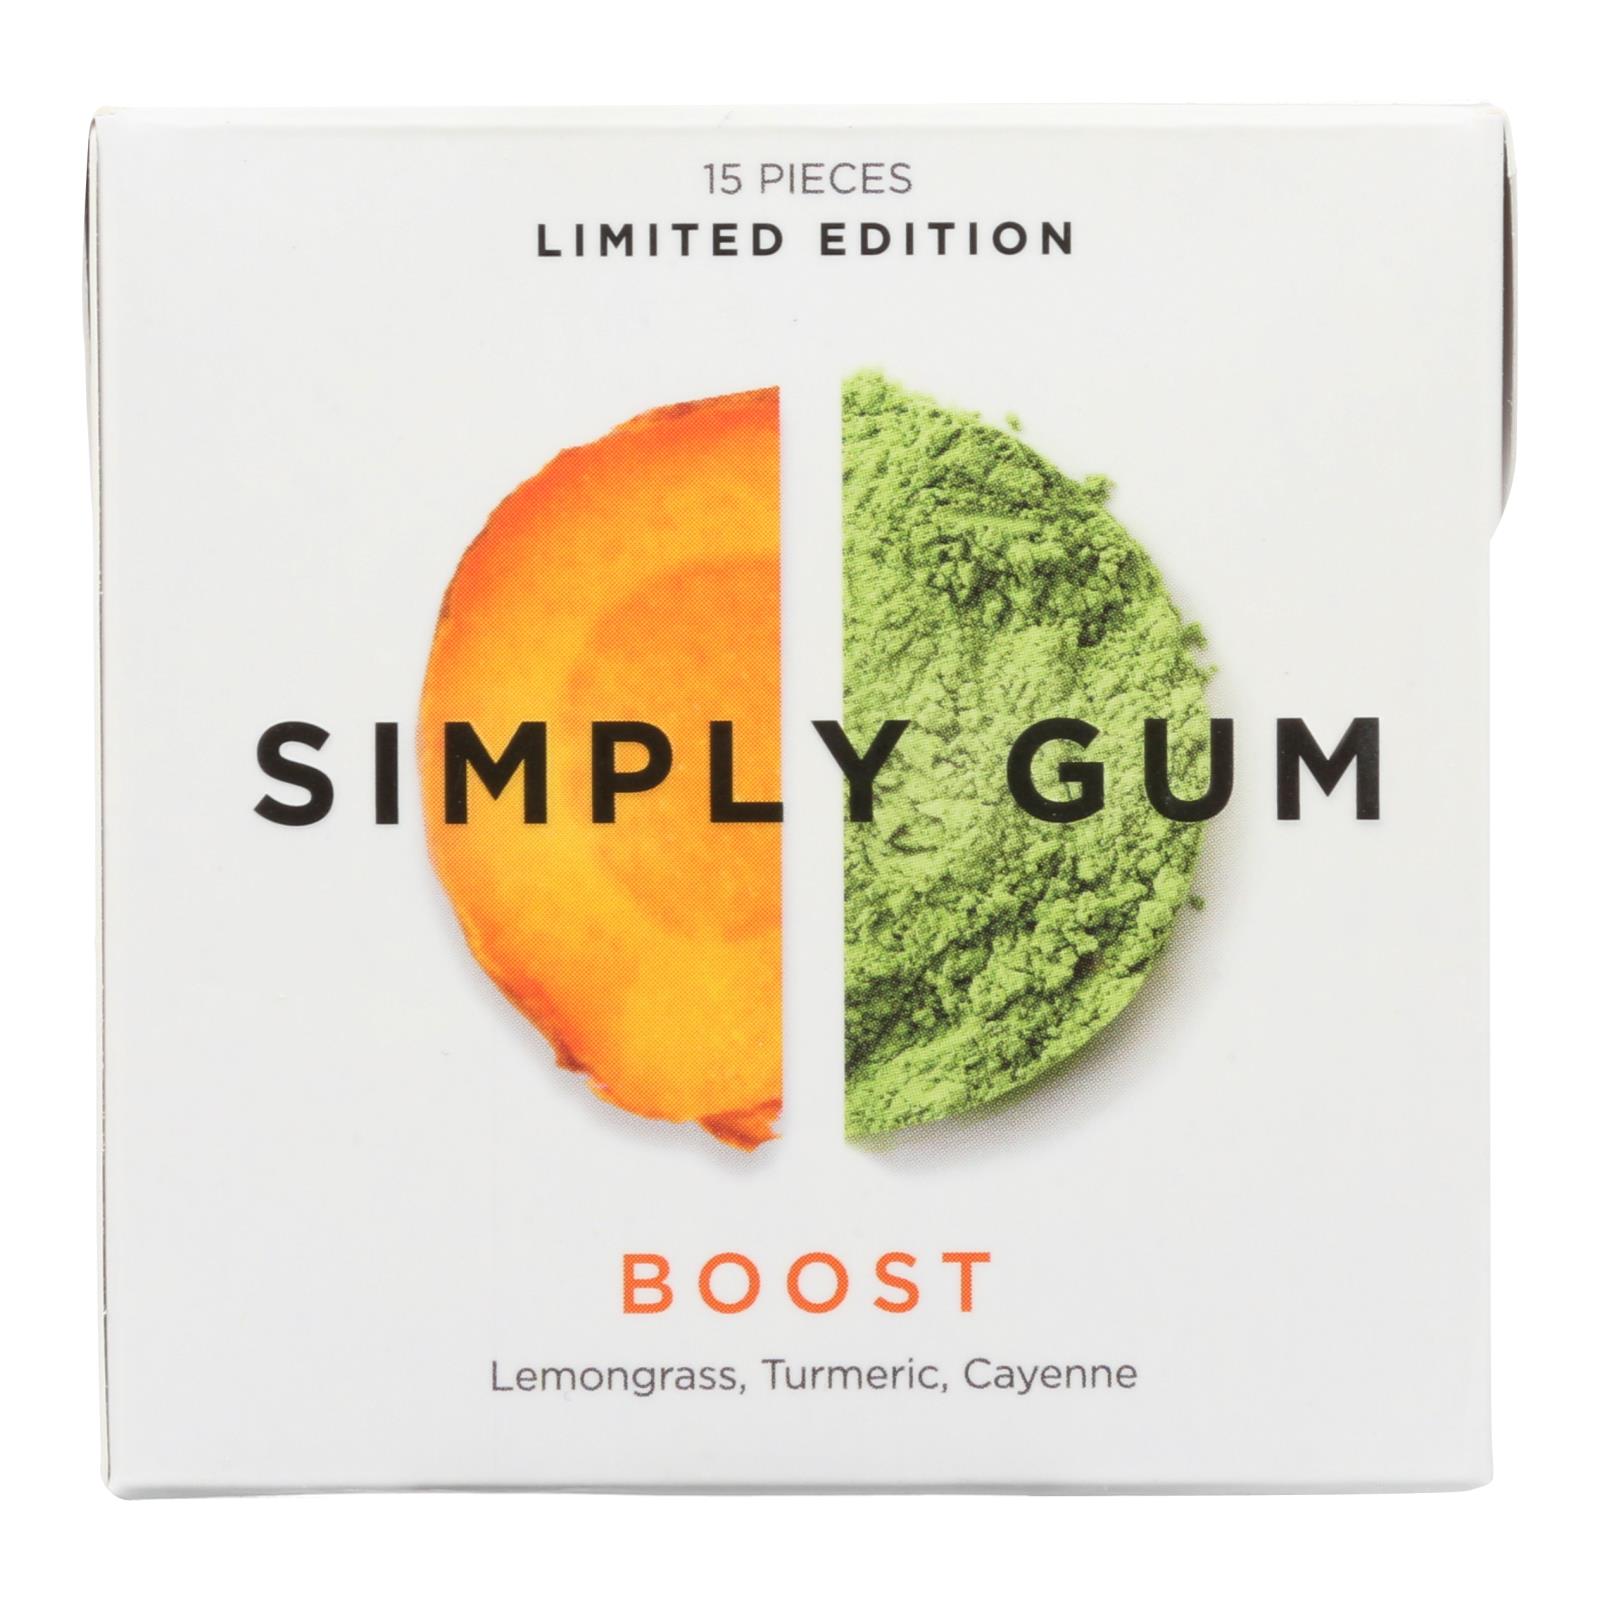 Simply Gum - Gum Boost - 12개 묶음상품 - 15 CT